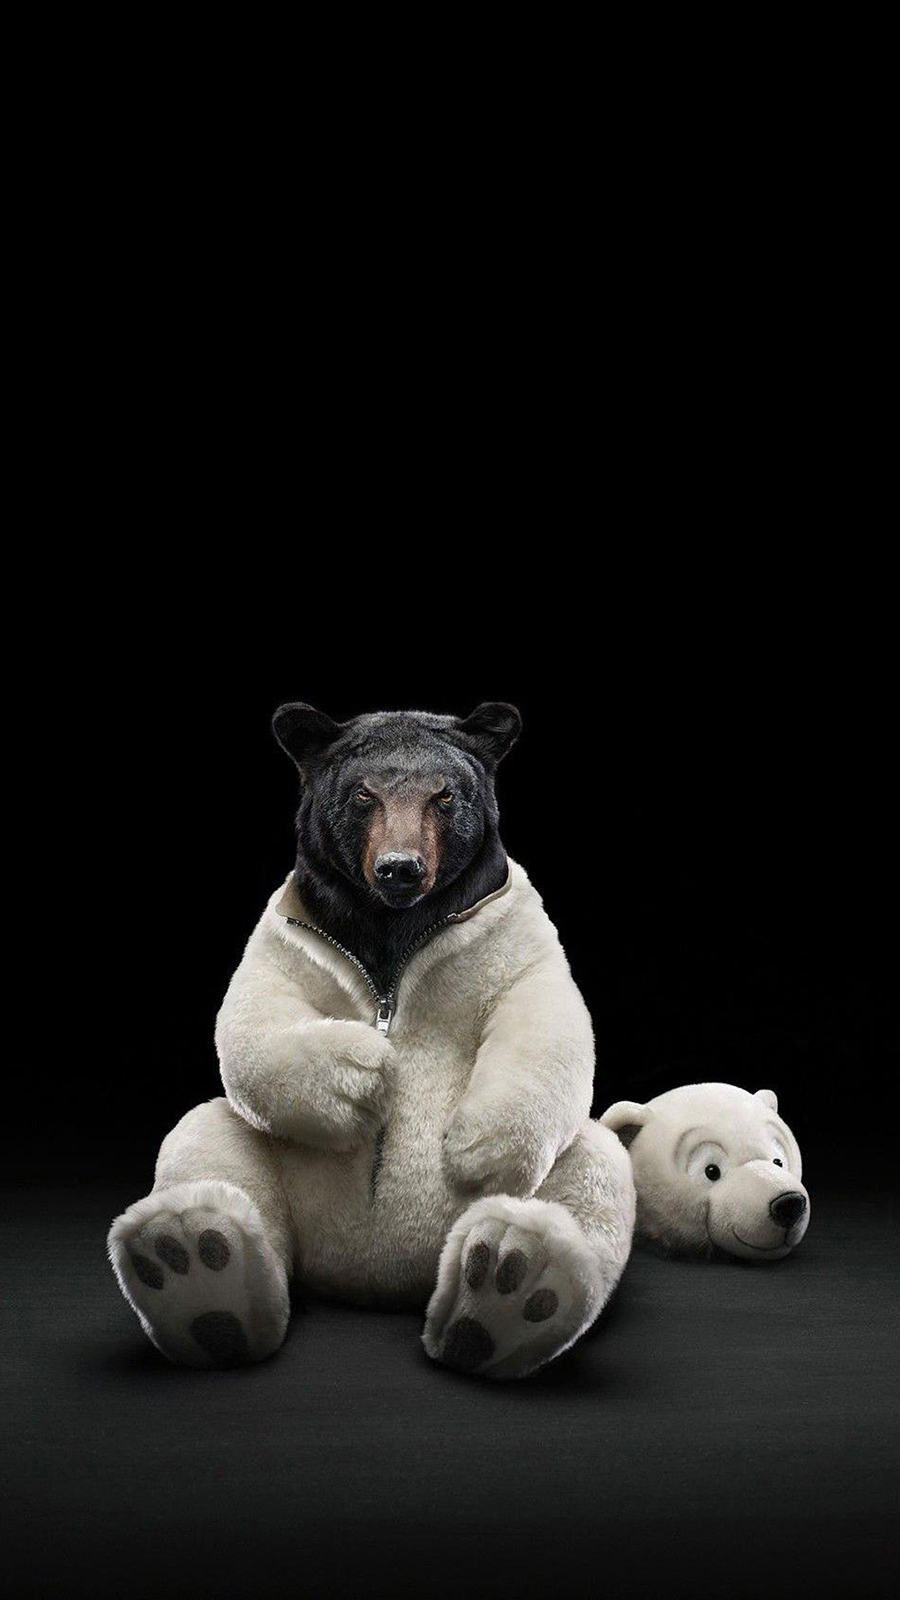 Black Bear Polar Full HD Wallpapers Download